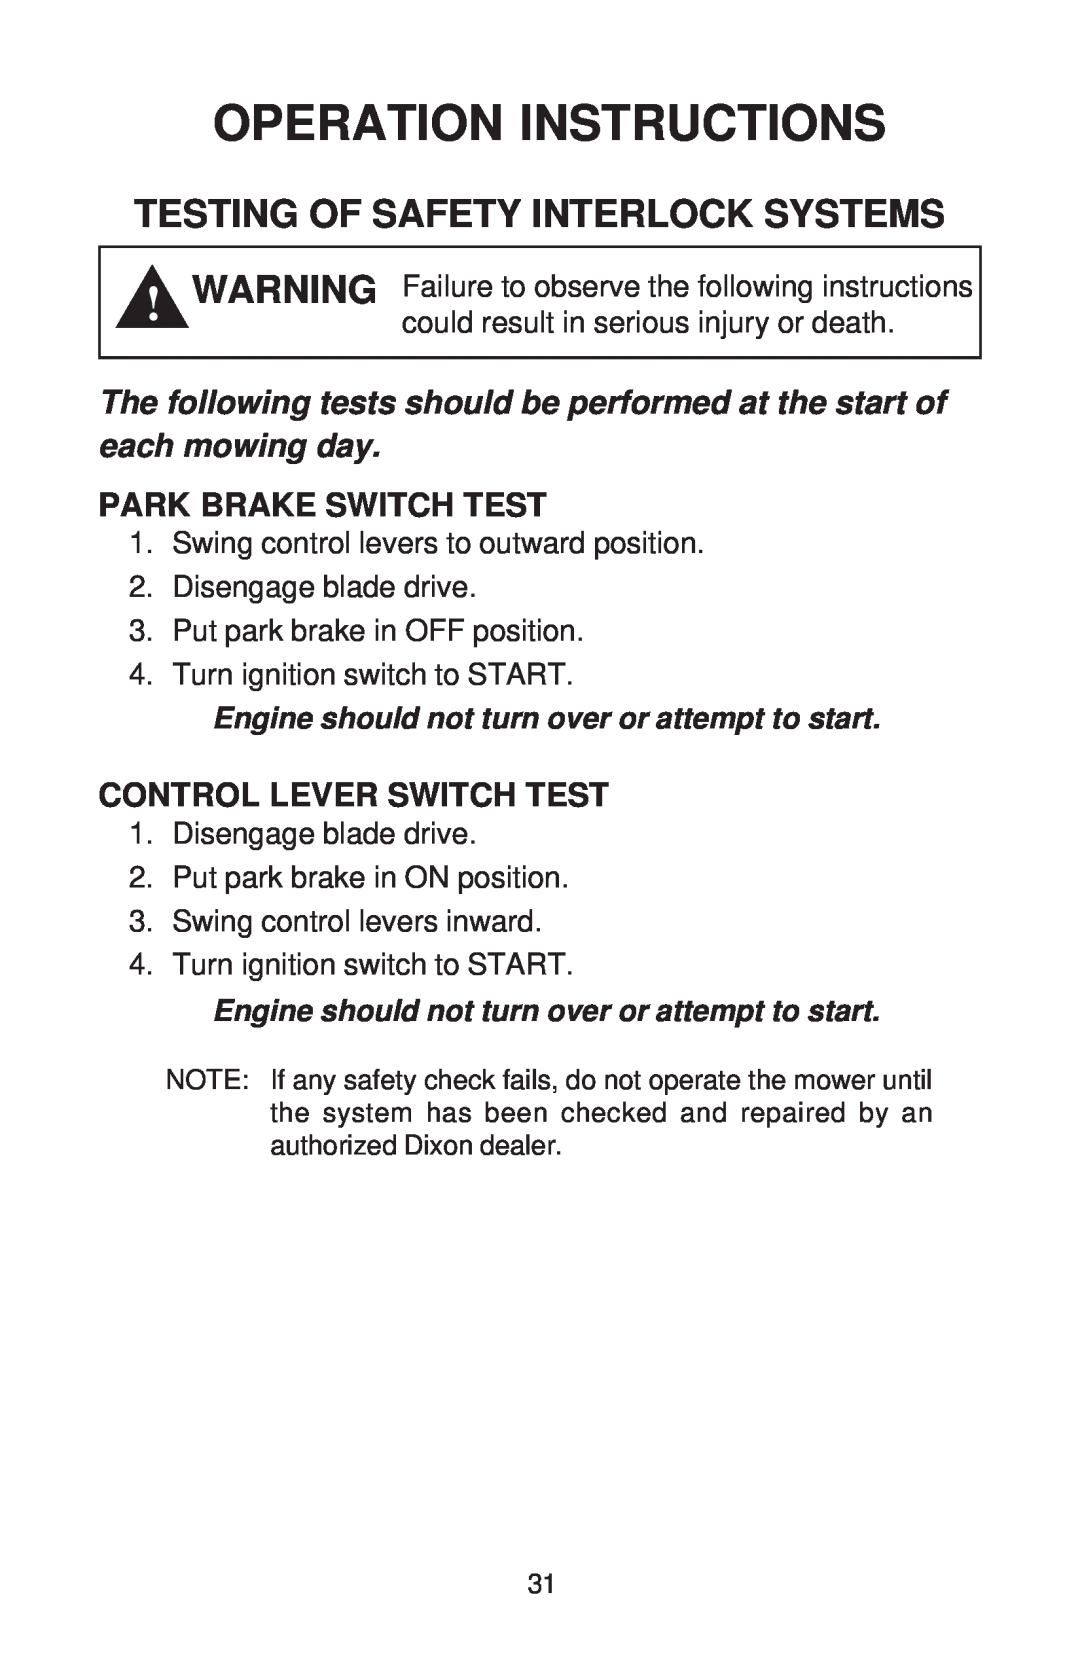 Dixon RAM 42, RAM 44, RAM 50, RAM 44 MAG, RAM 50 MAG manual Testing Of Safety Interlock Systems, Park Brake Switch Test 